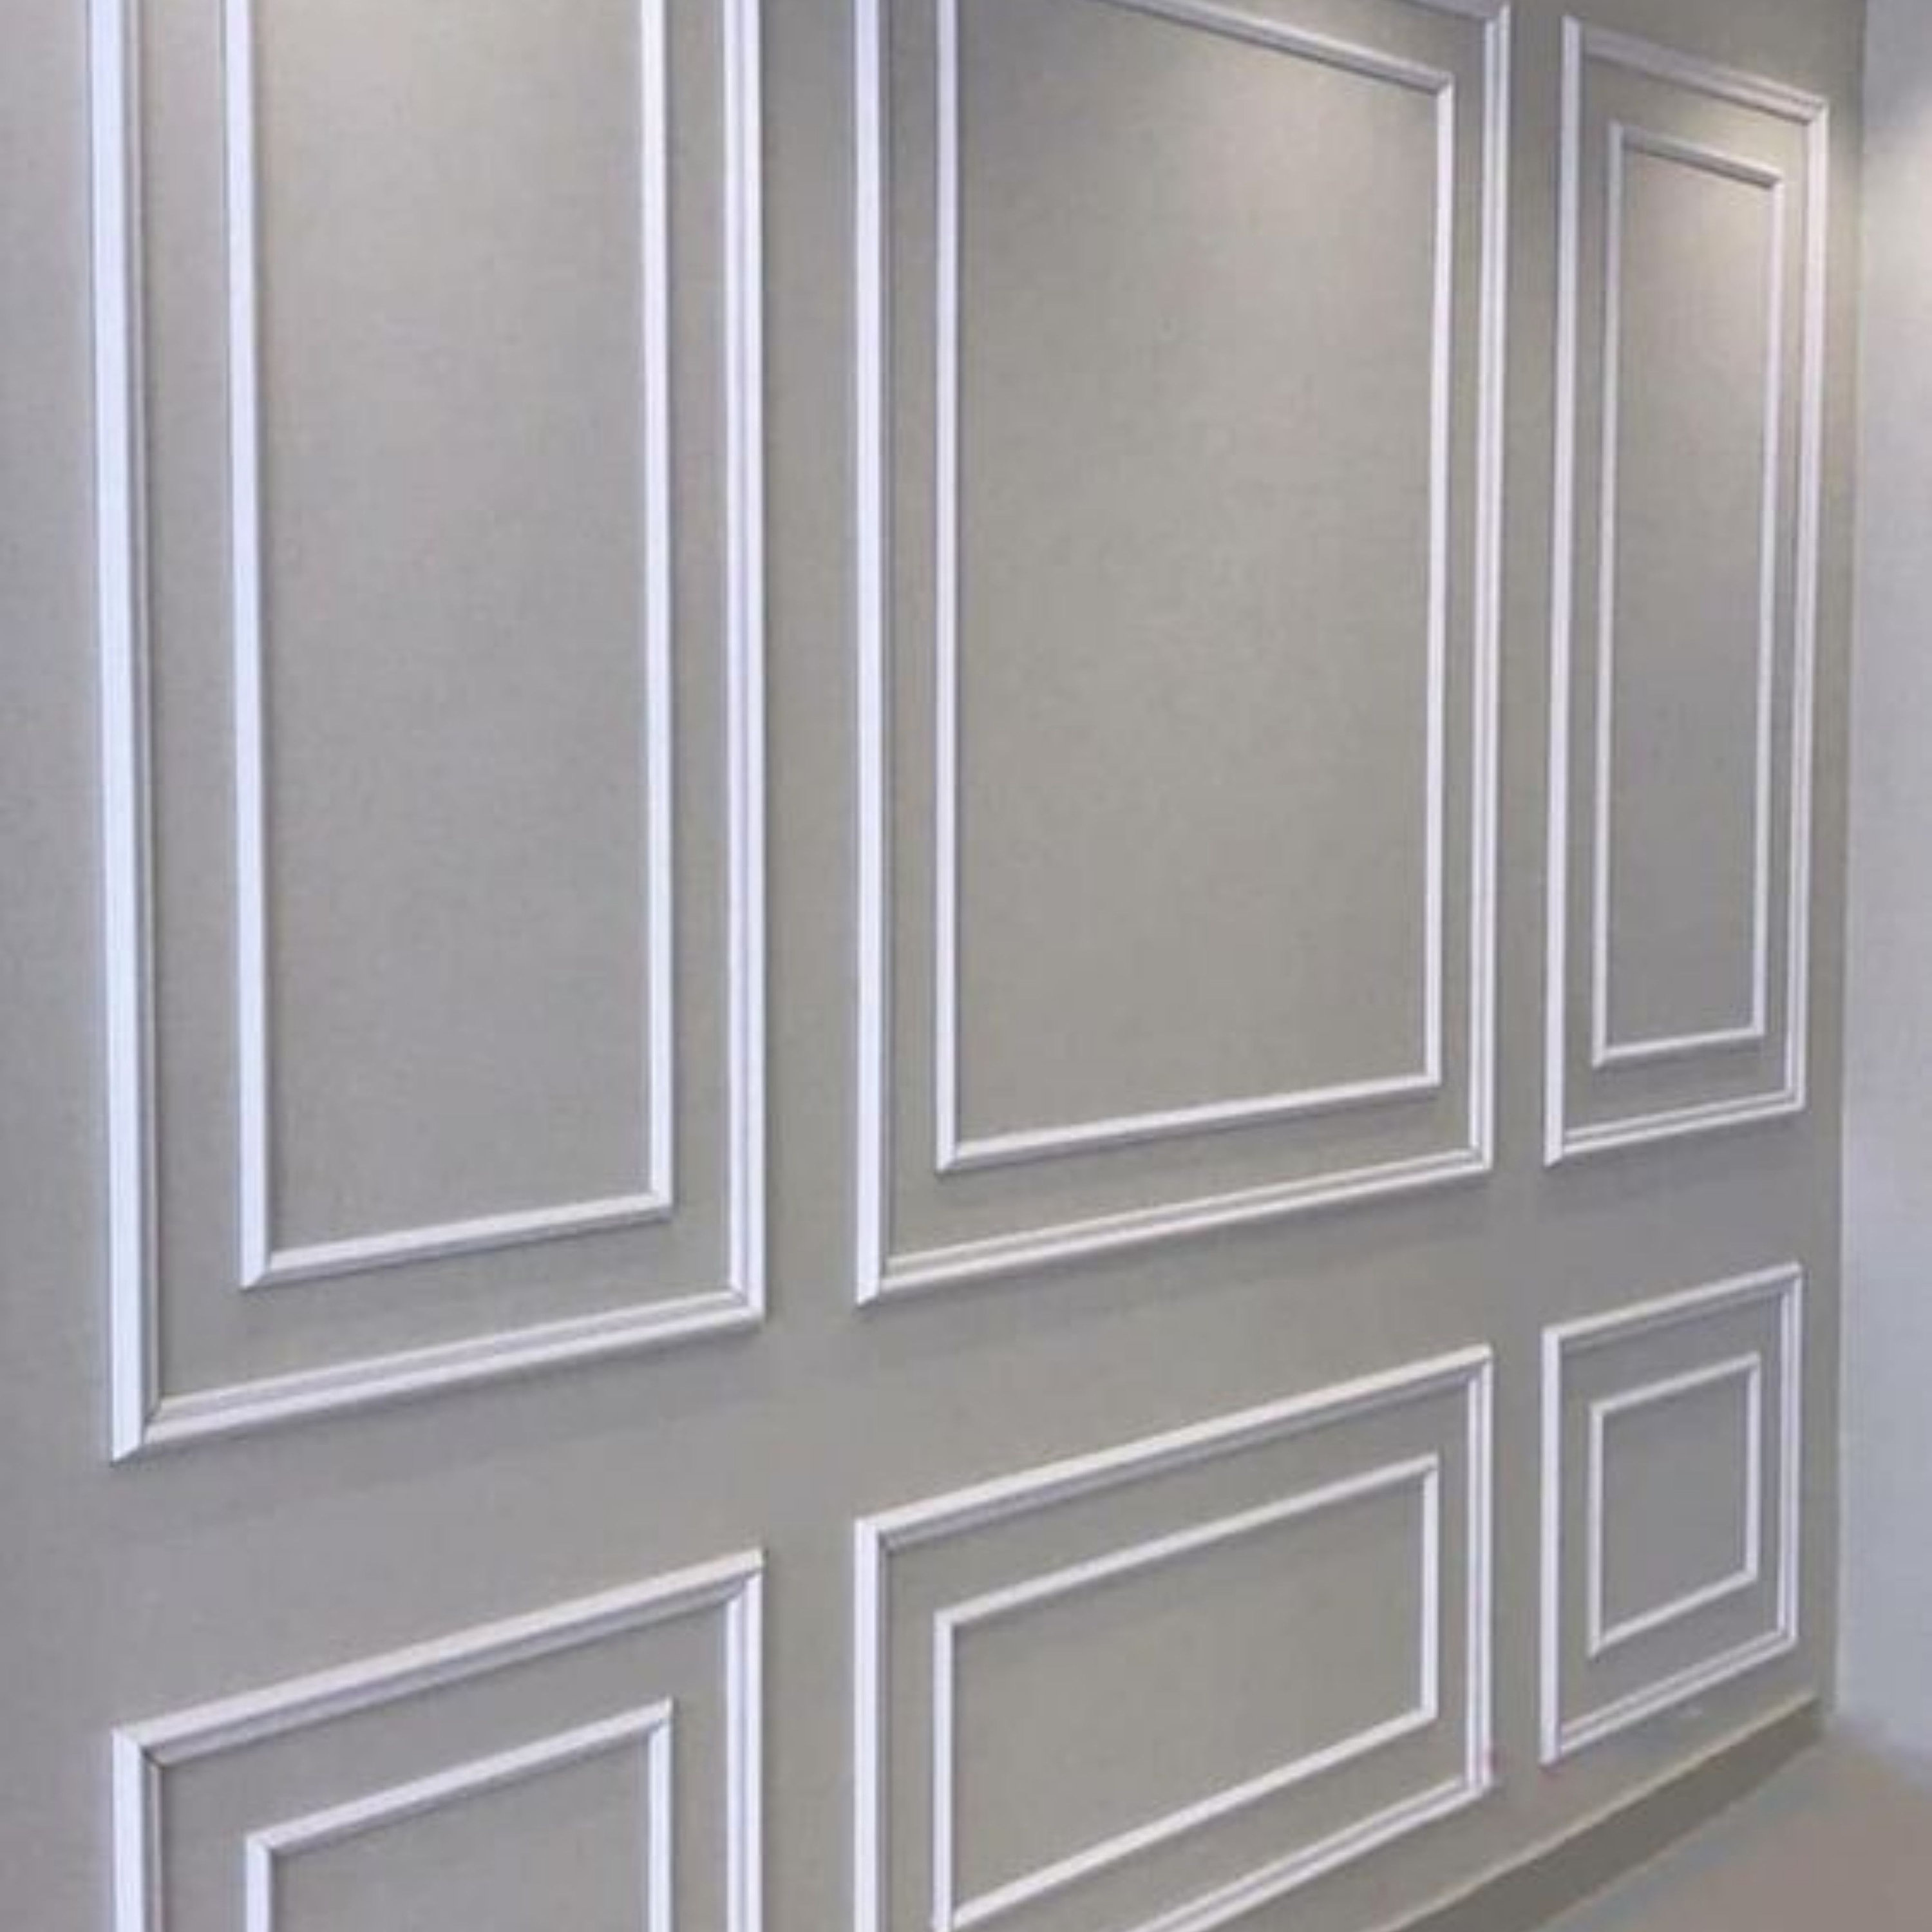  4ROOMS, Kit de molduras decorativas de pared, 15050100-517, Poliestireno de alto impacto, Blanco imprimado